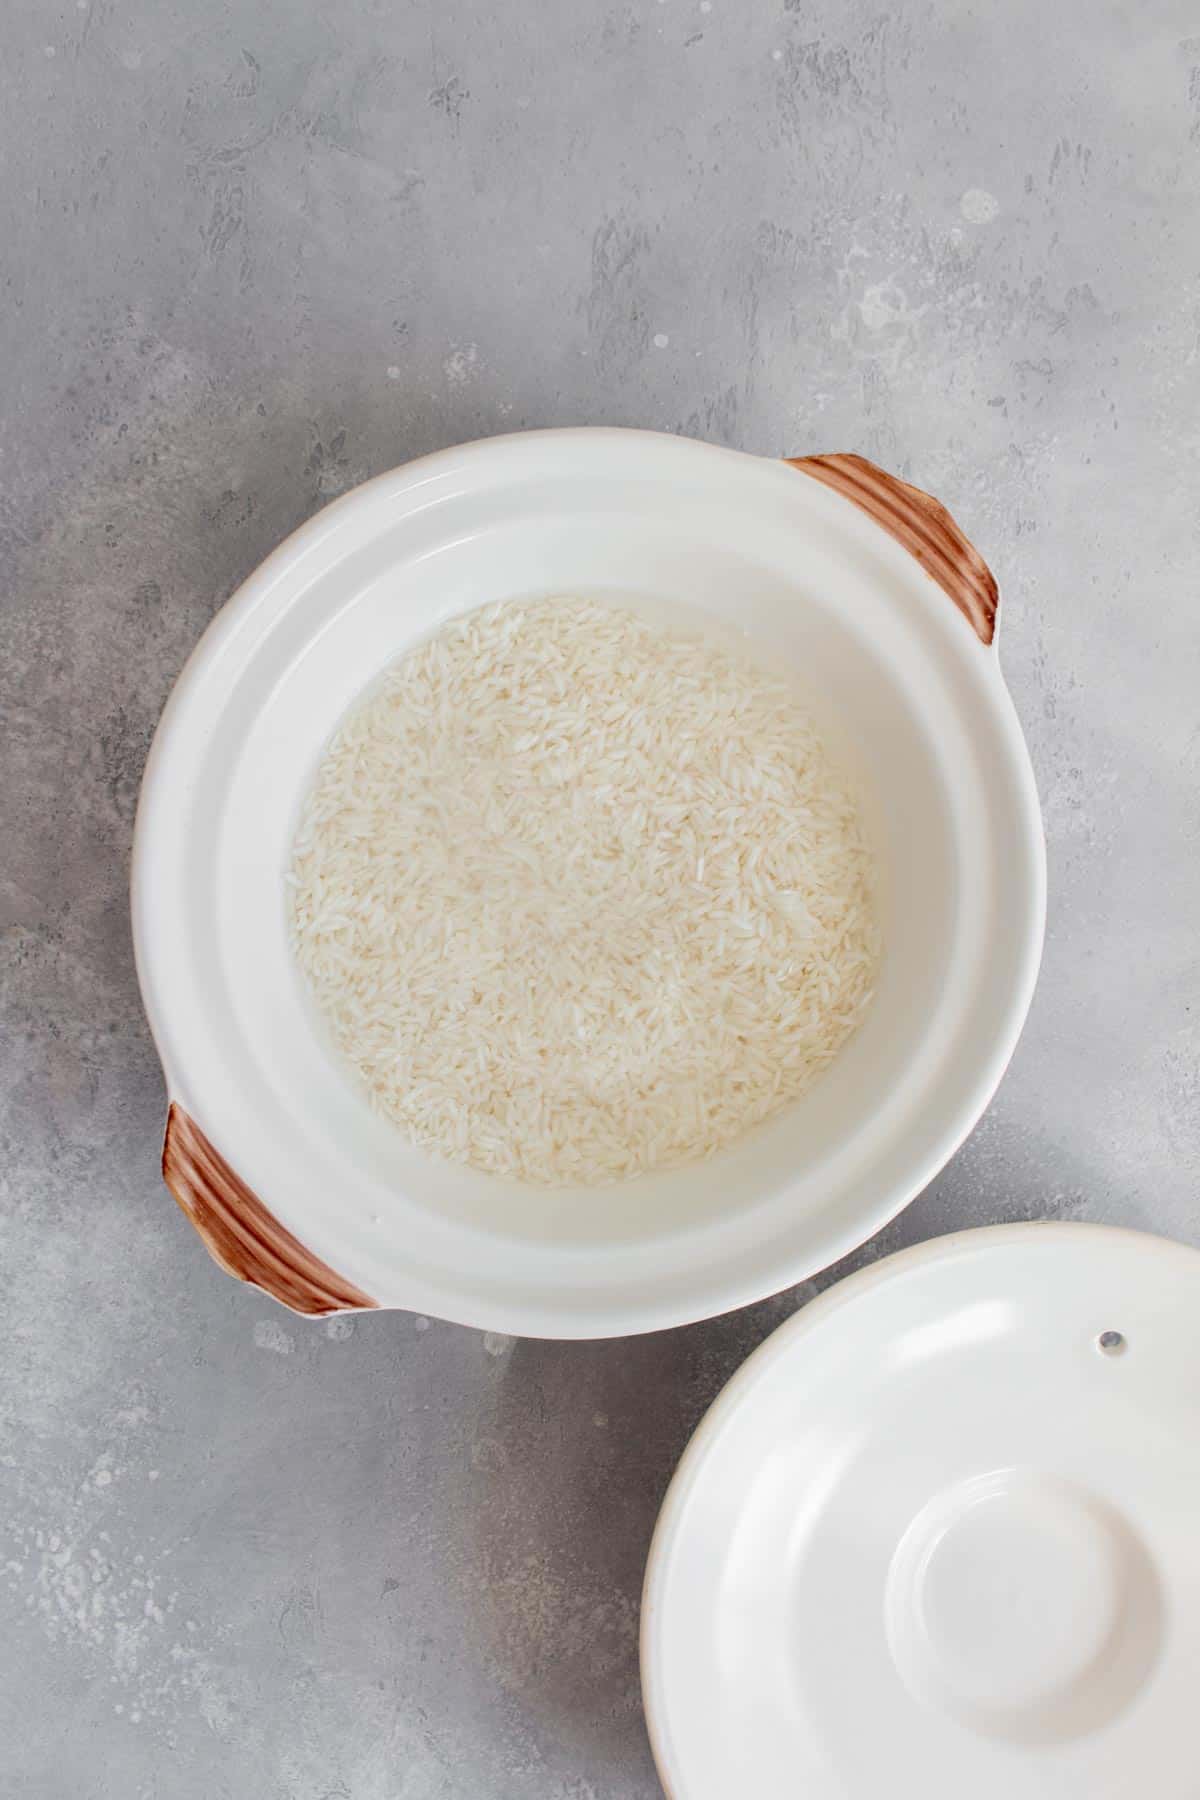 Rice soaking in a pot.